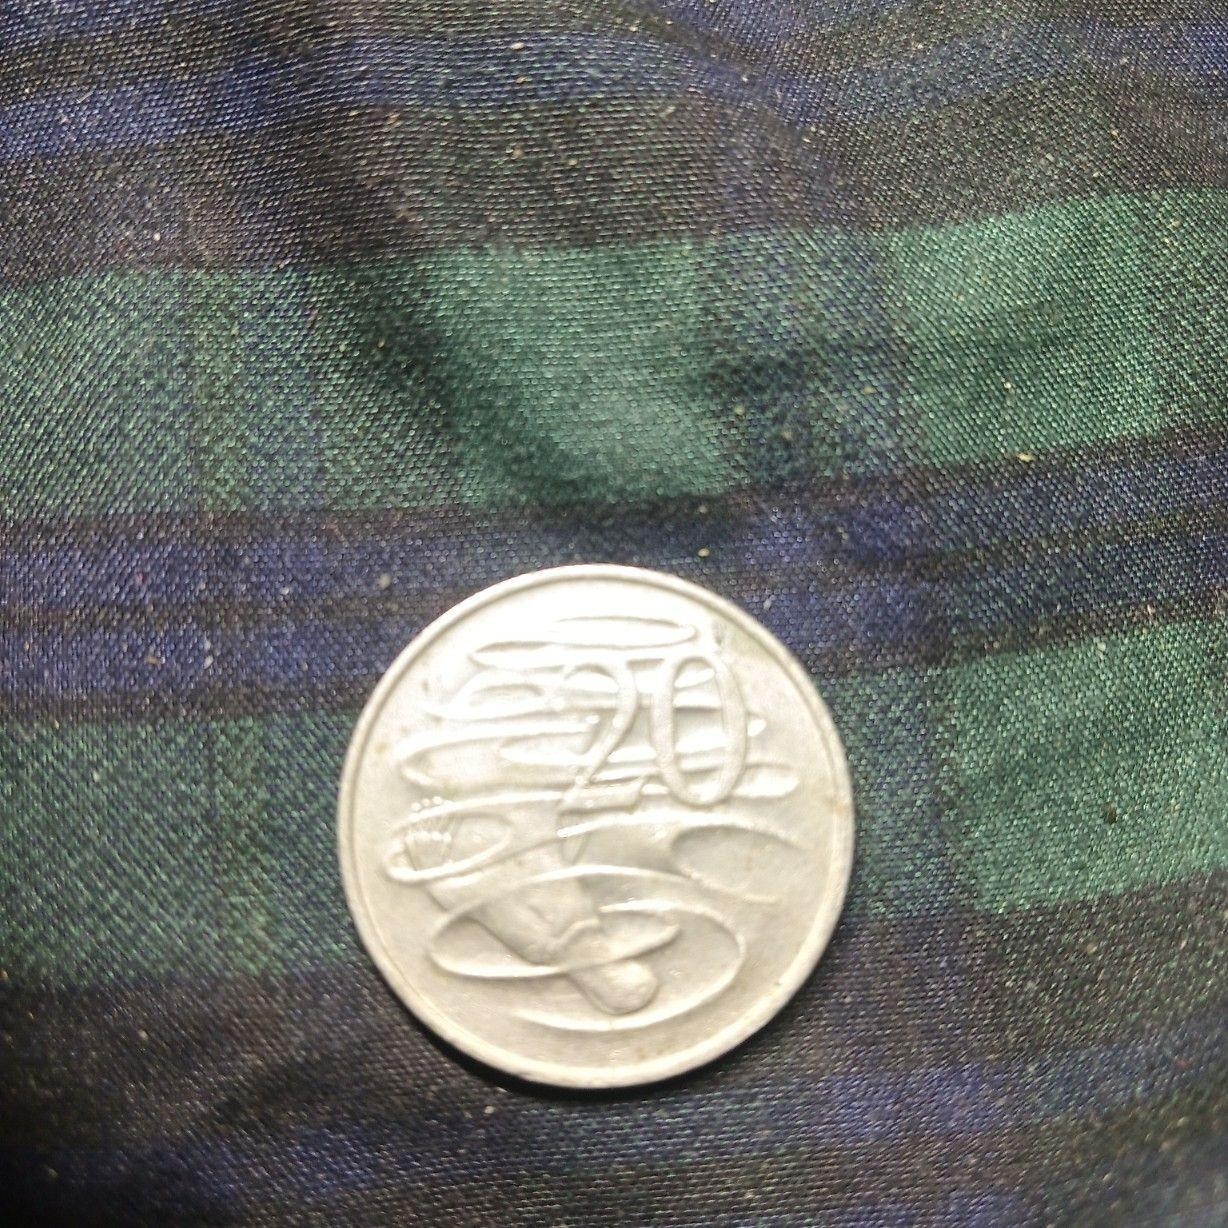 Australia Elizabeth II Platypus 20 Cents Coin